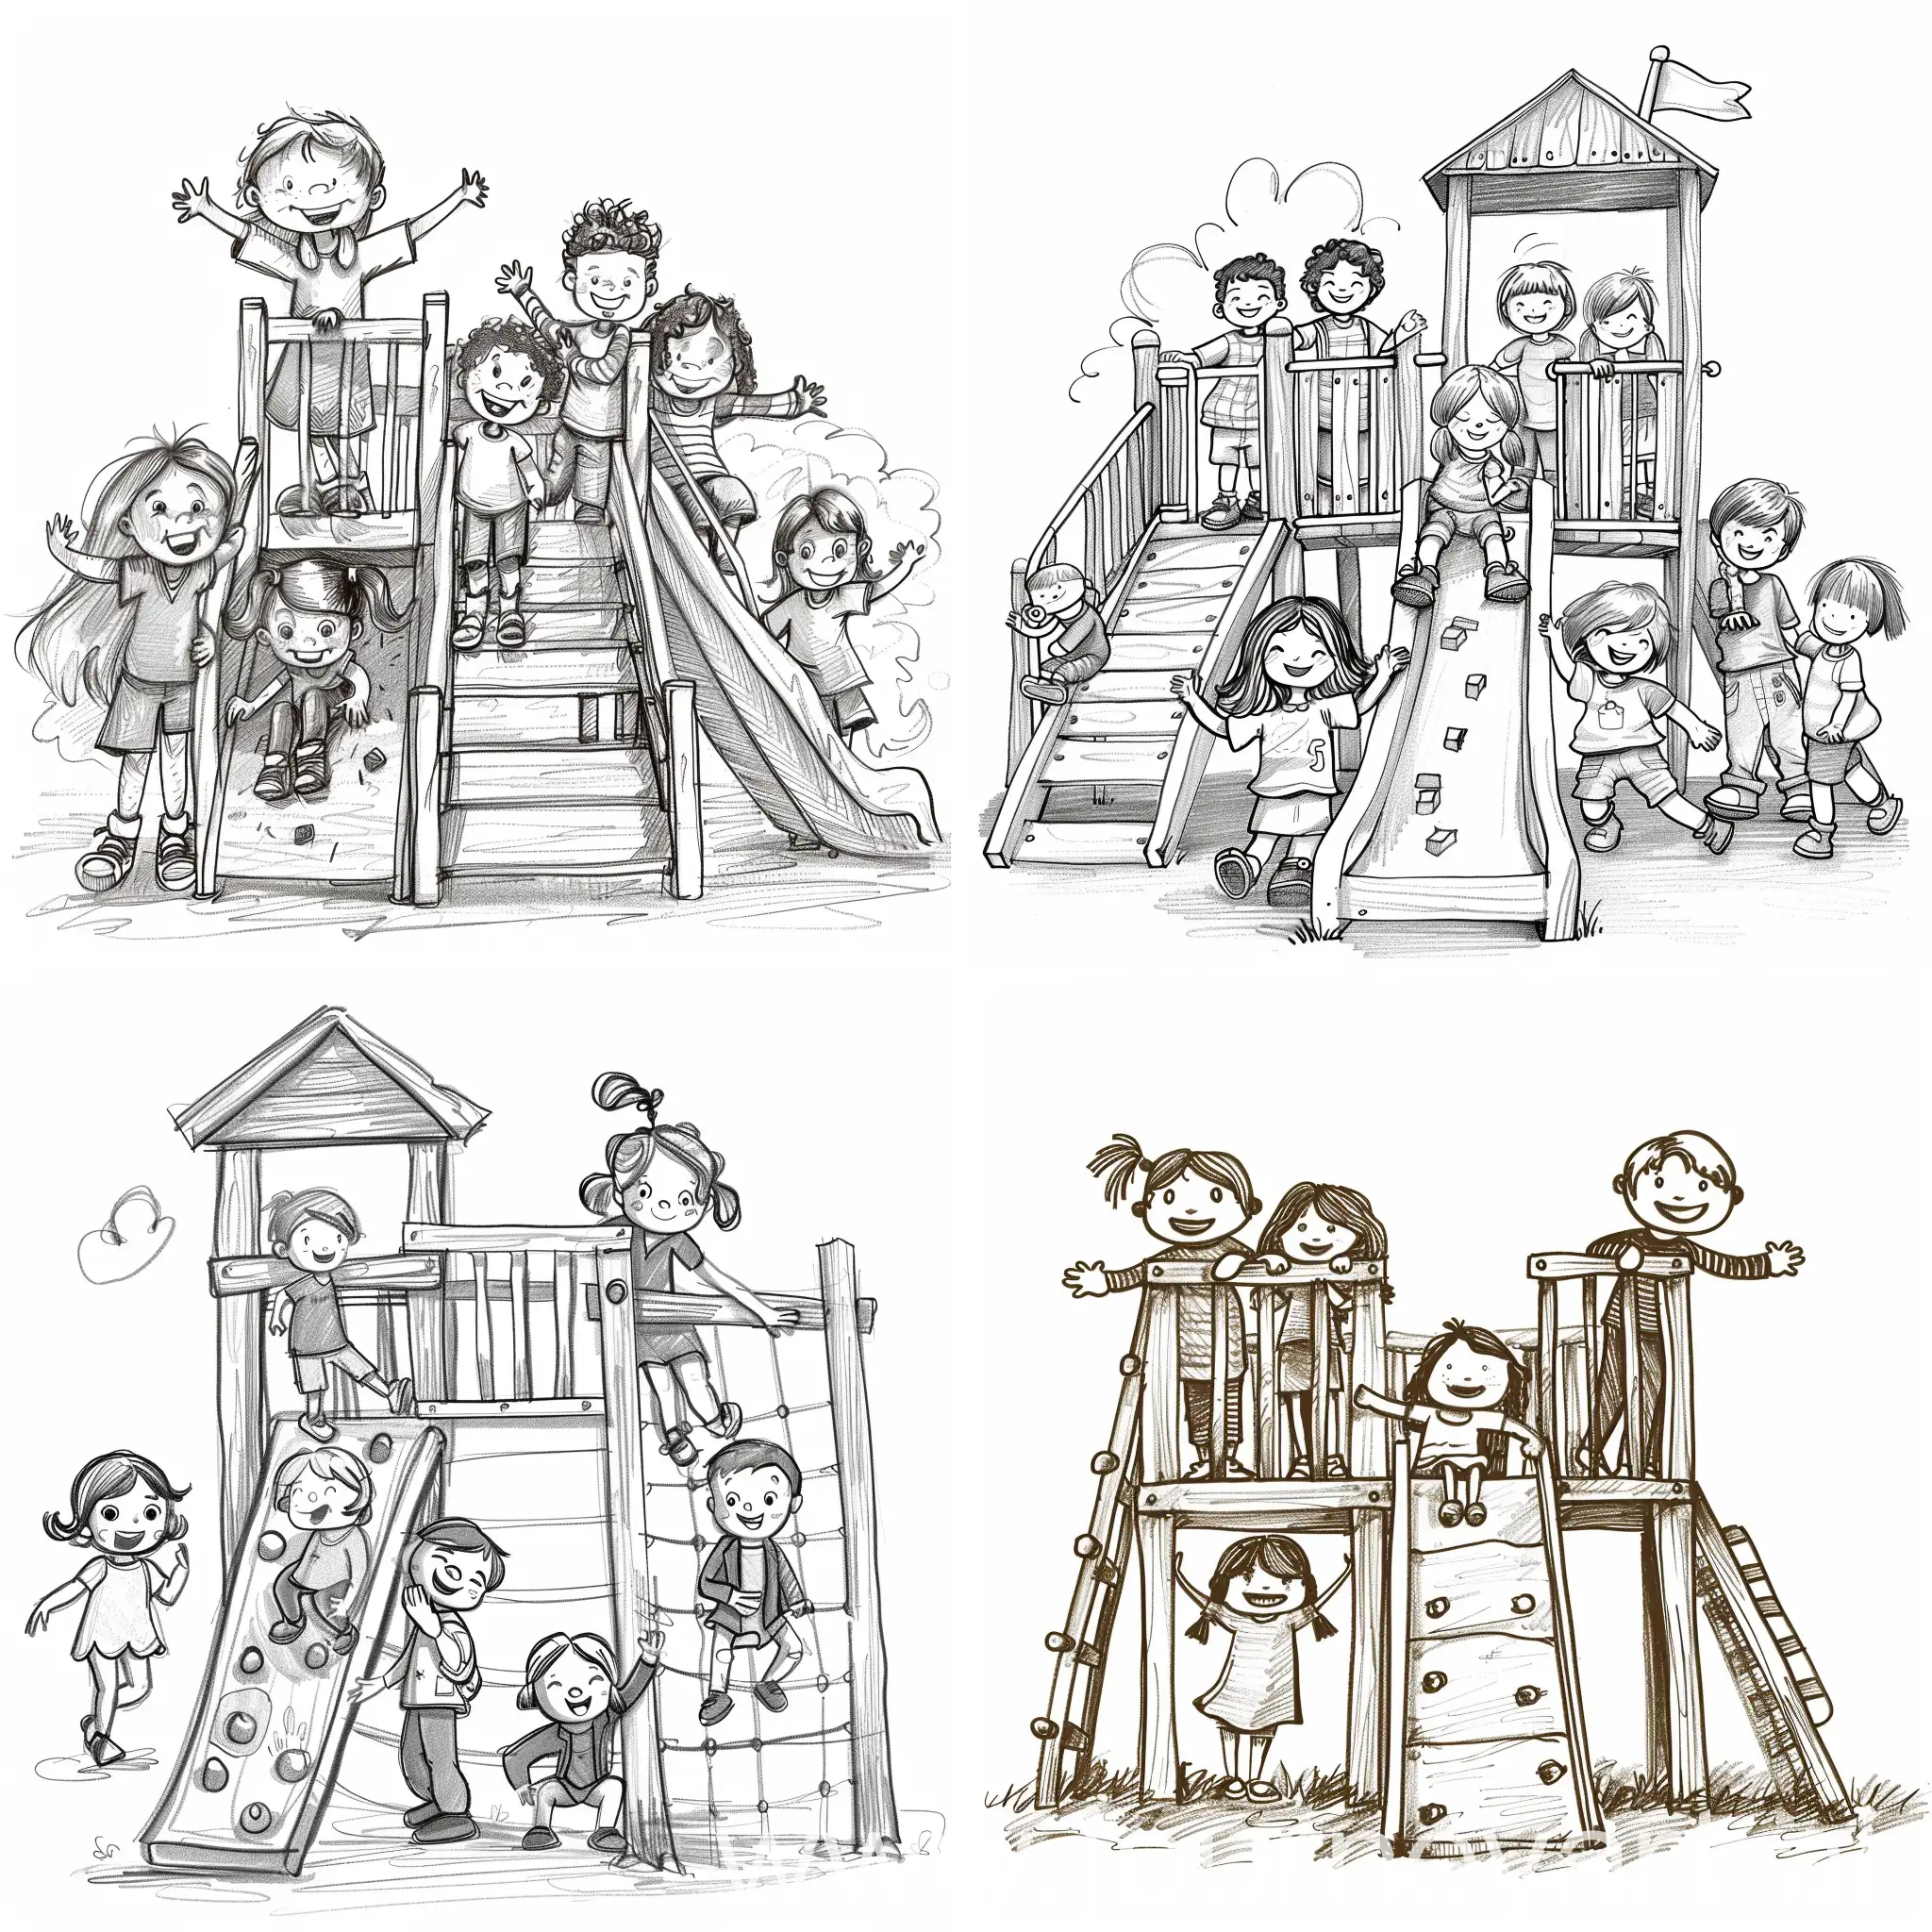 Joyful-Kids-Playing-on-Playground